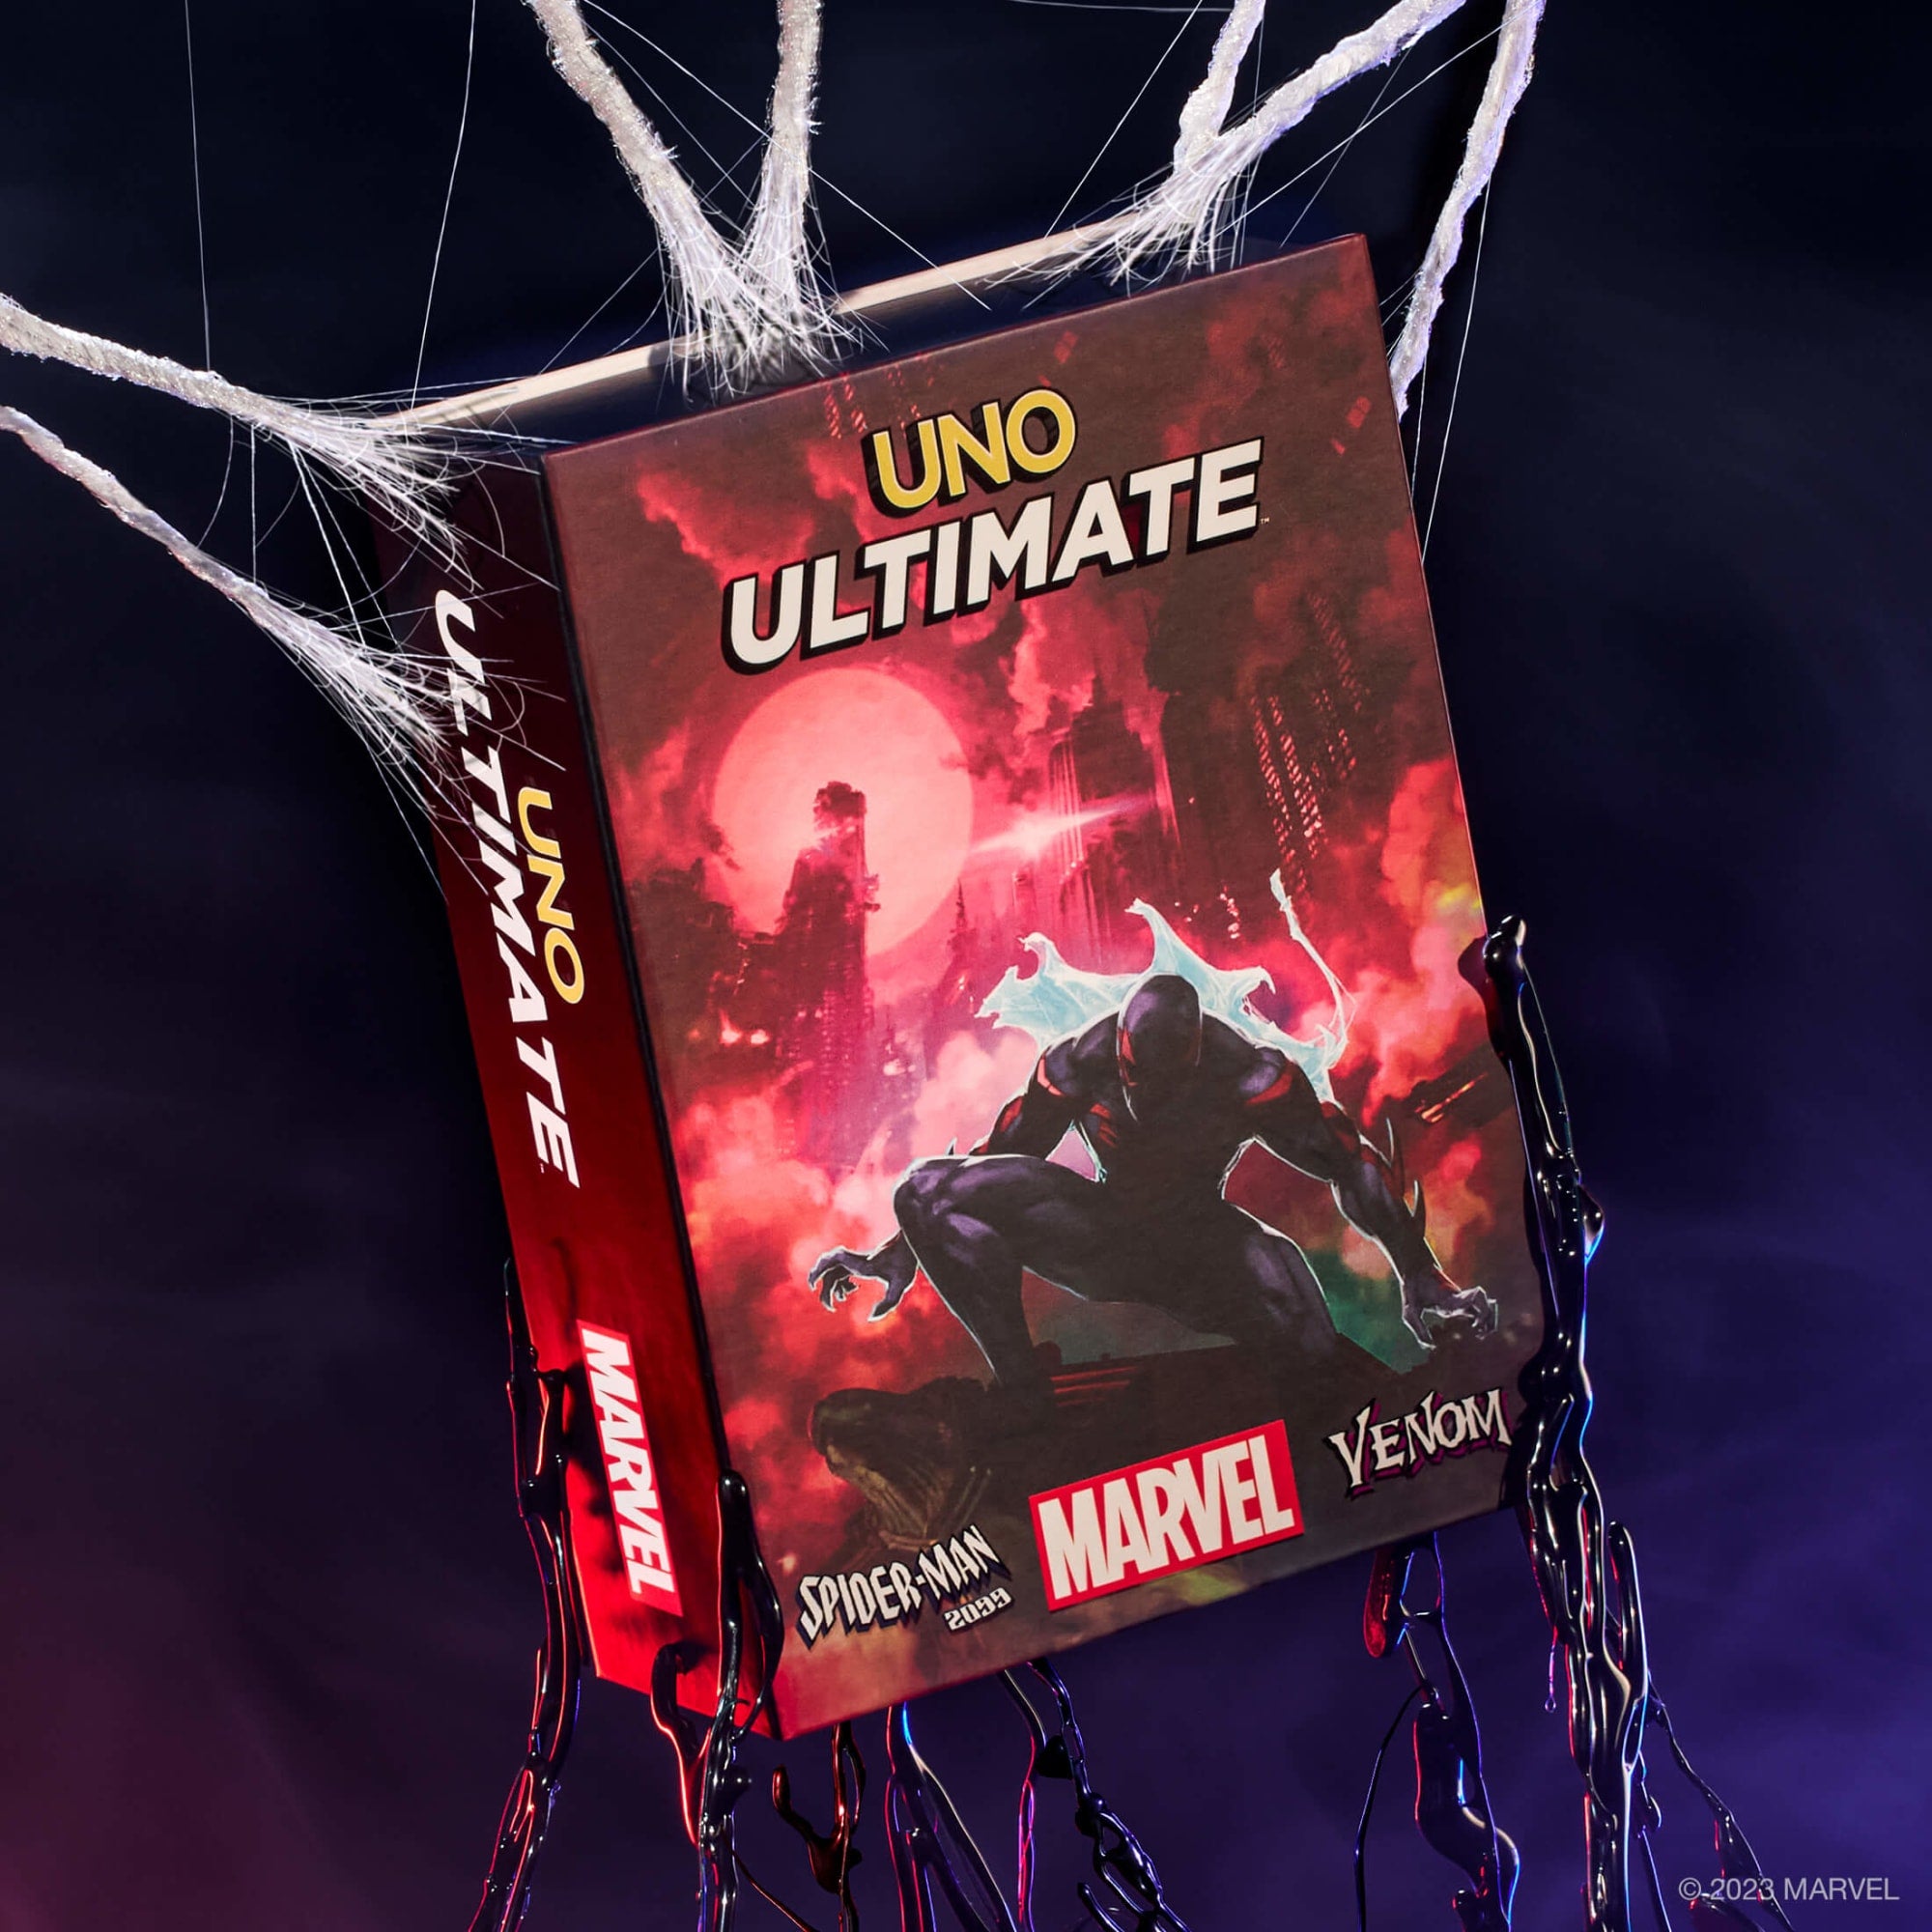 UNO Ultimate Marvel Spider-Man 2099 vs. Venom Add-On 2-Pack